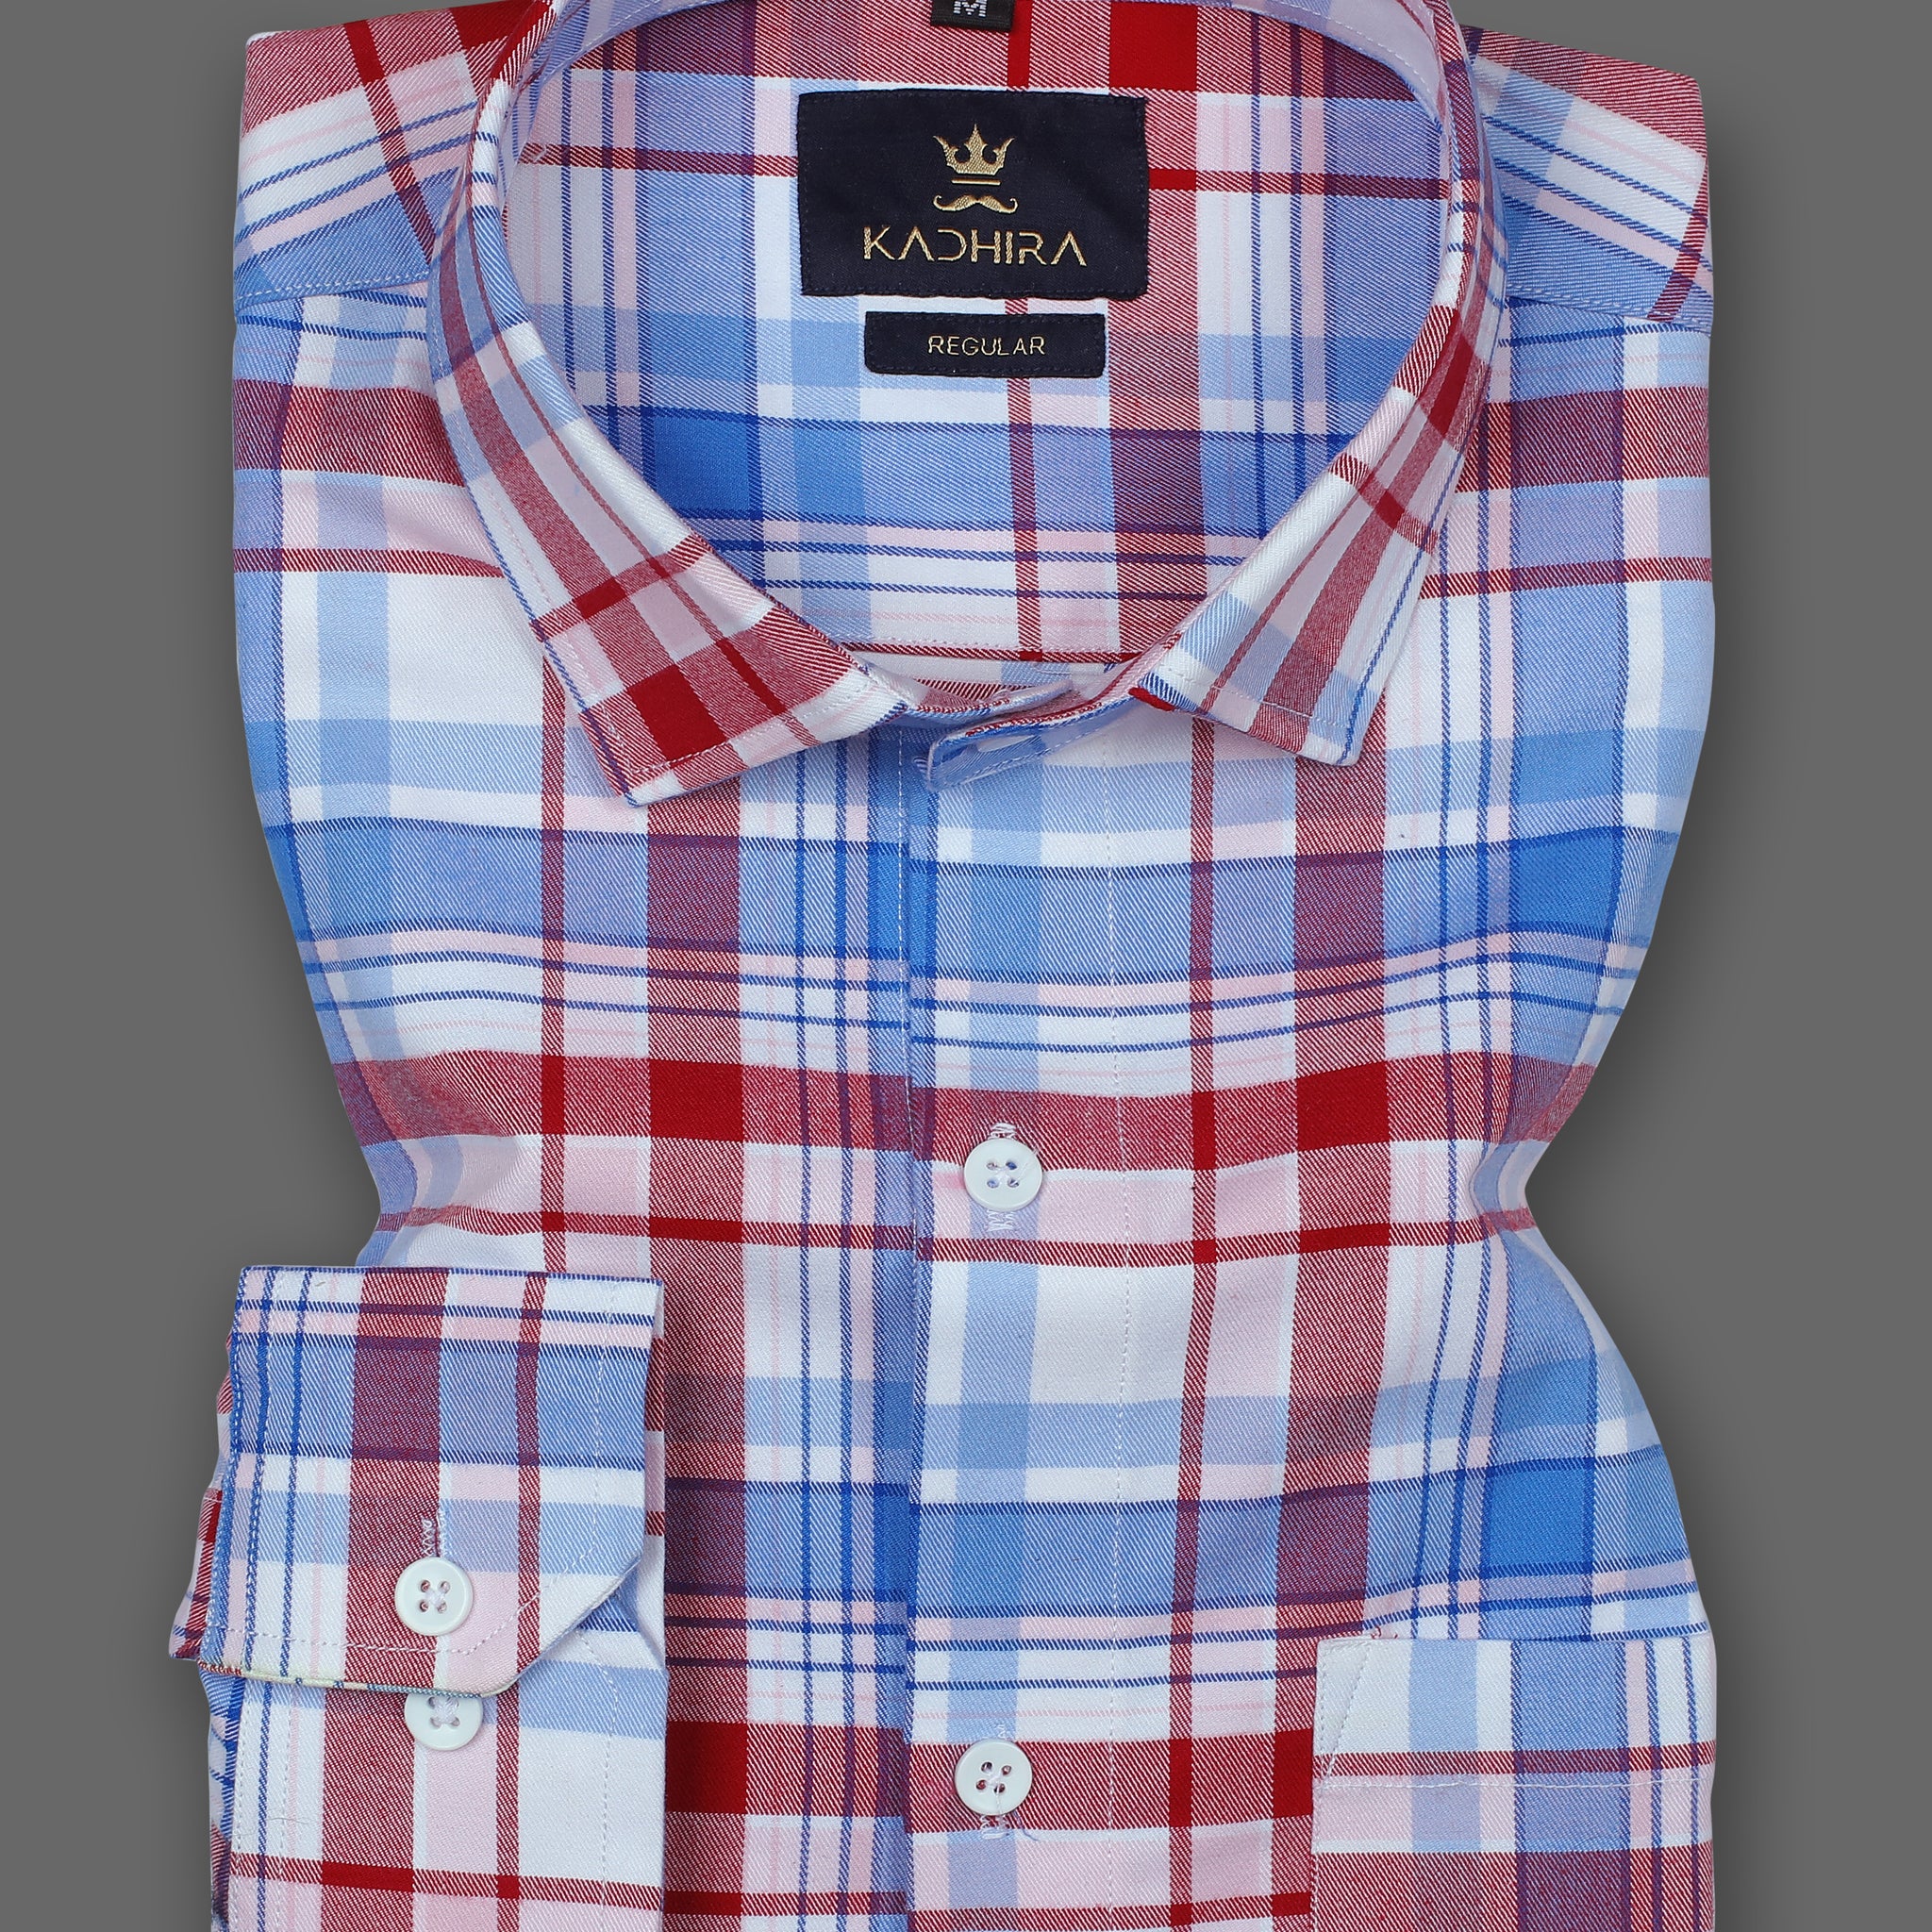 Dodger Blue & Red Checkered Premium Cotton Shirt